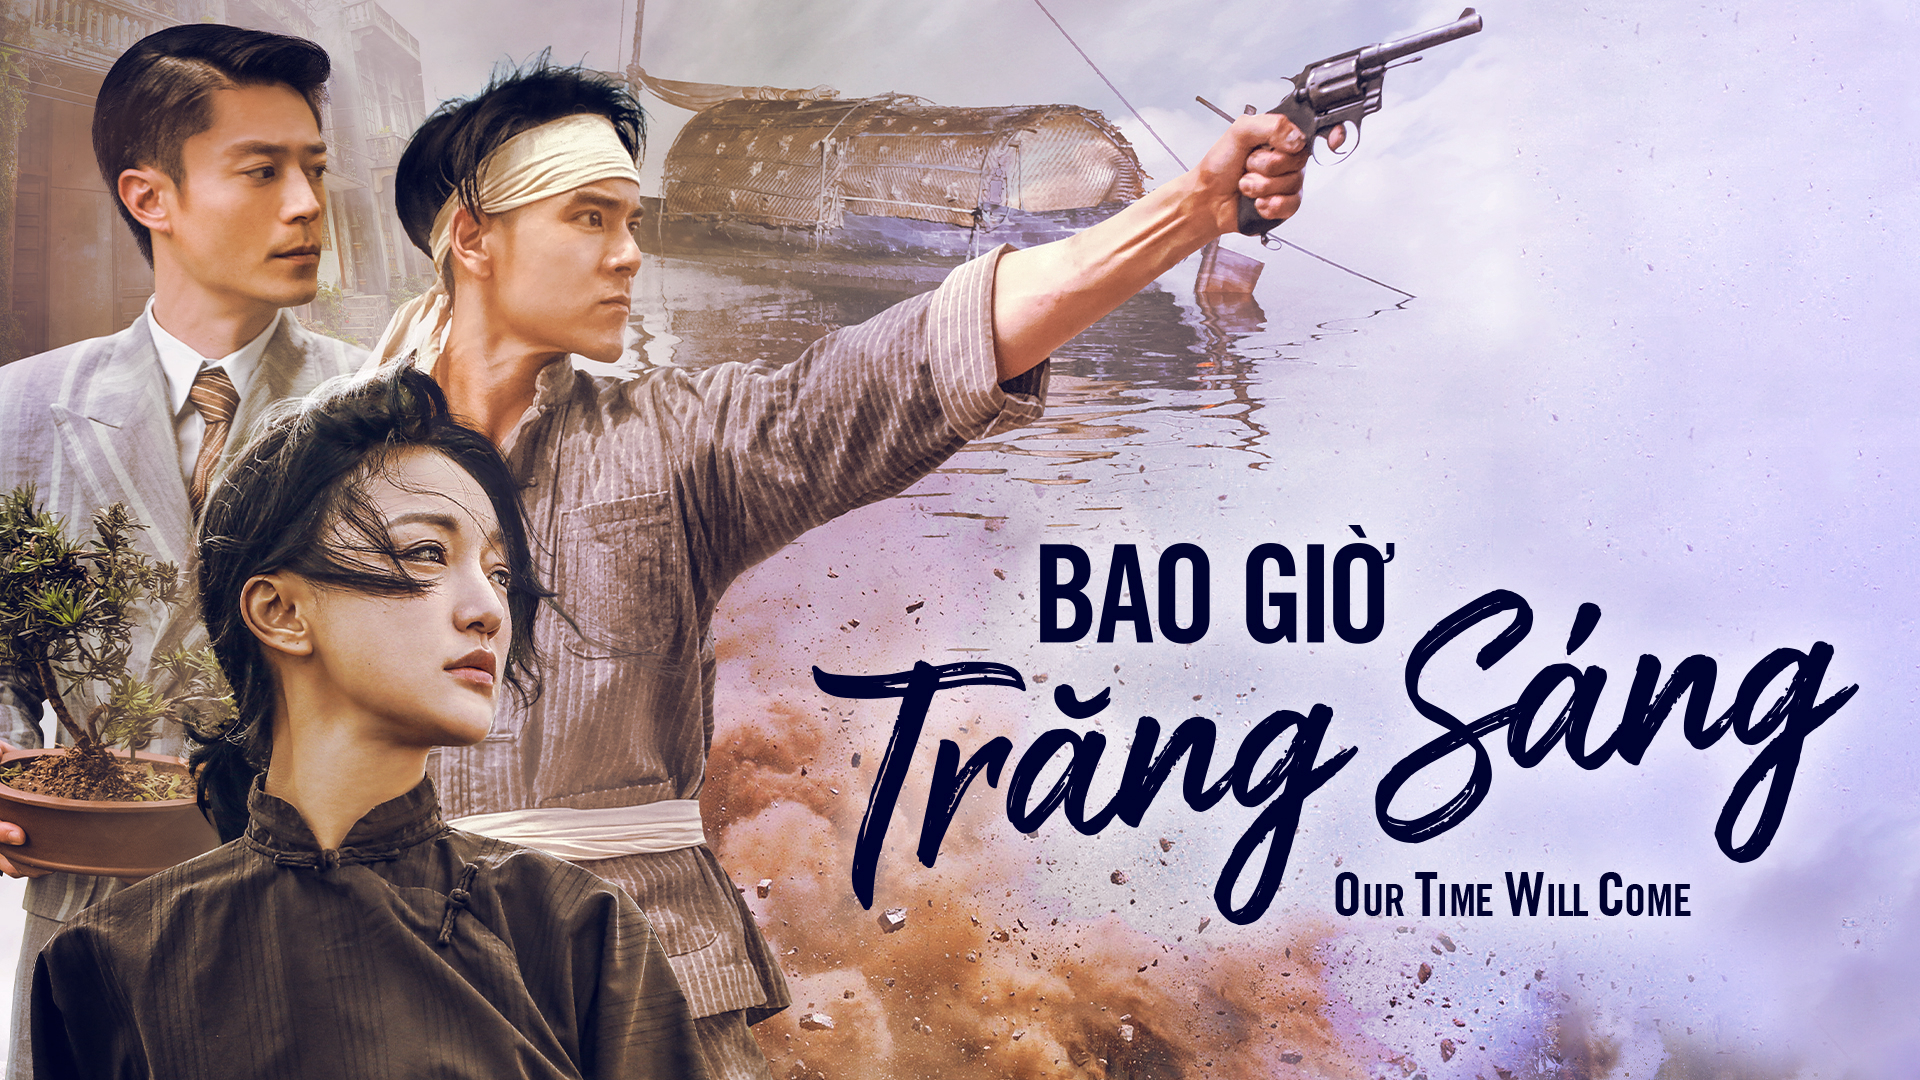 Xem Phim Bao Giờ Trăng Sáng (Our Time Will Come)